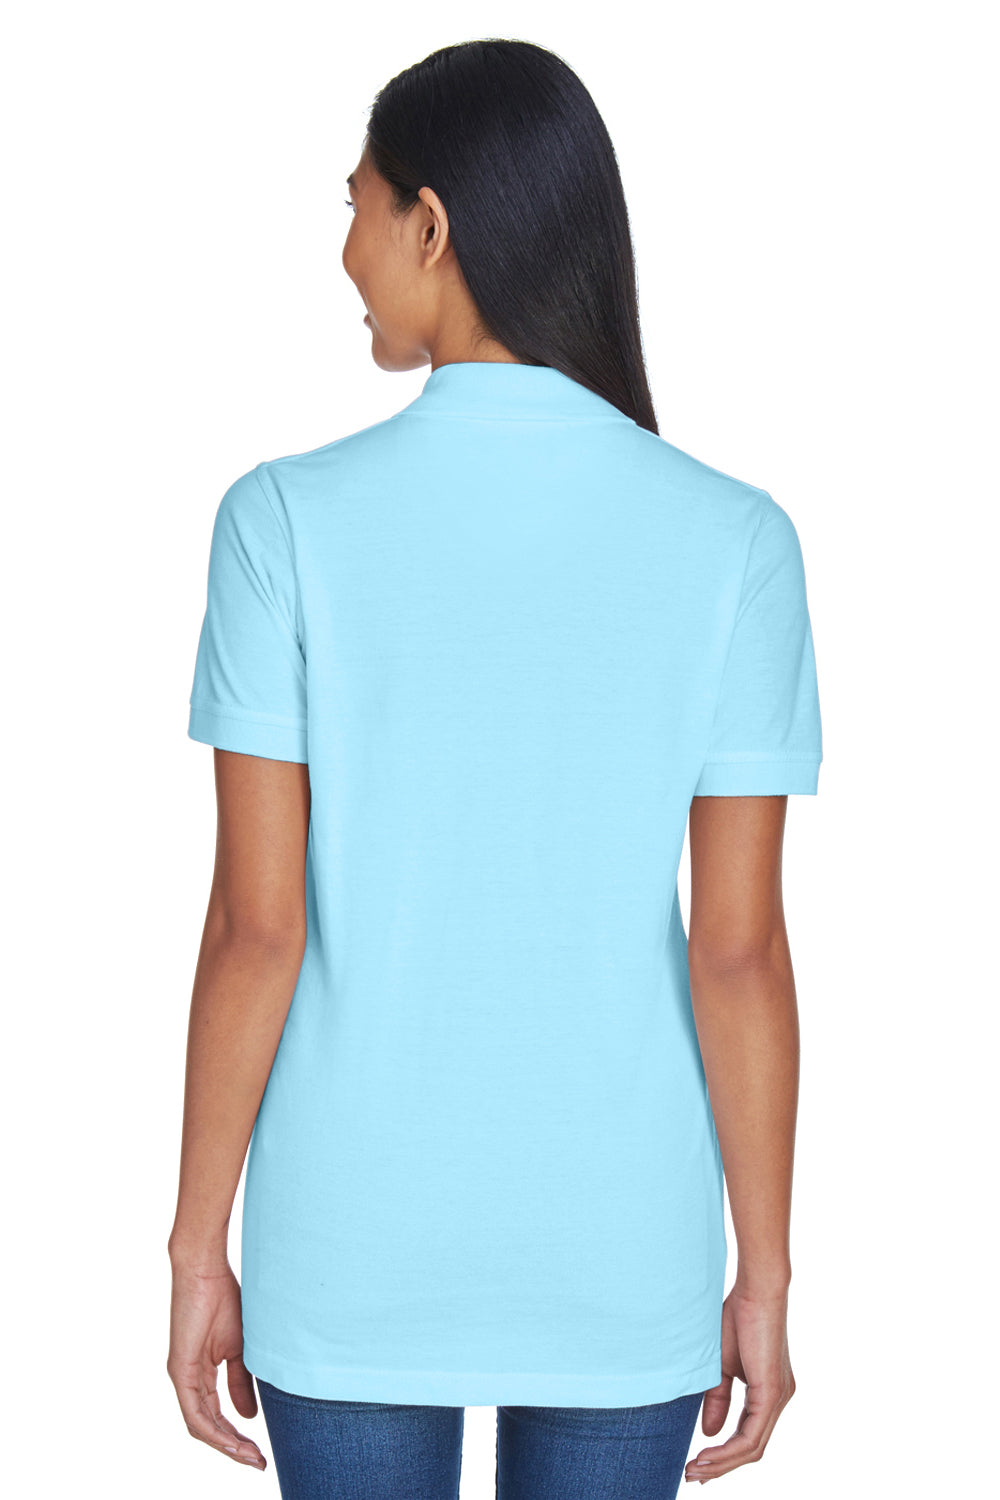 UltraClub 8530 Womens Classic Short Sleeve Polo Shirt Baby Blue Back